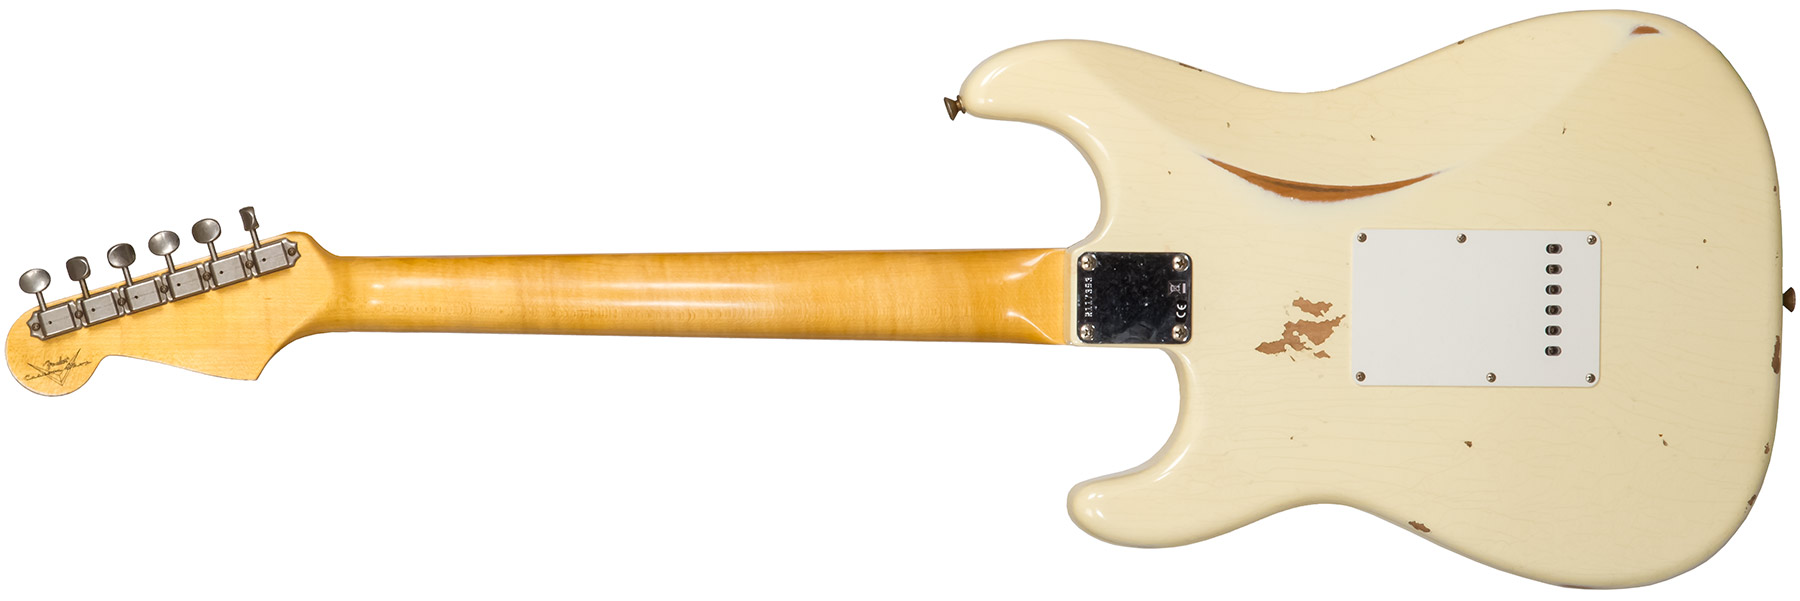 Fender Custom Shop Strat 1959 3s Trem Rw #r117393 - Relic Aged Vintage White - Guitare Électrique Forme Str - Variation 1